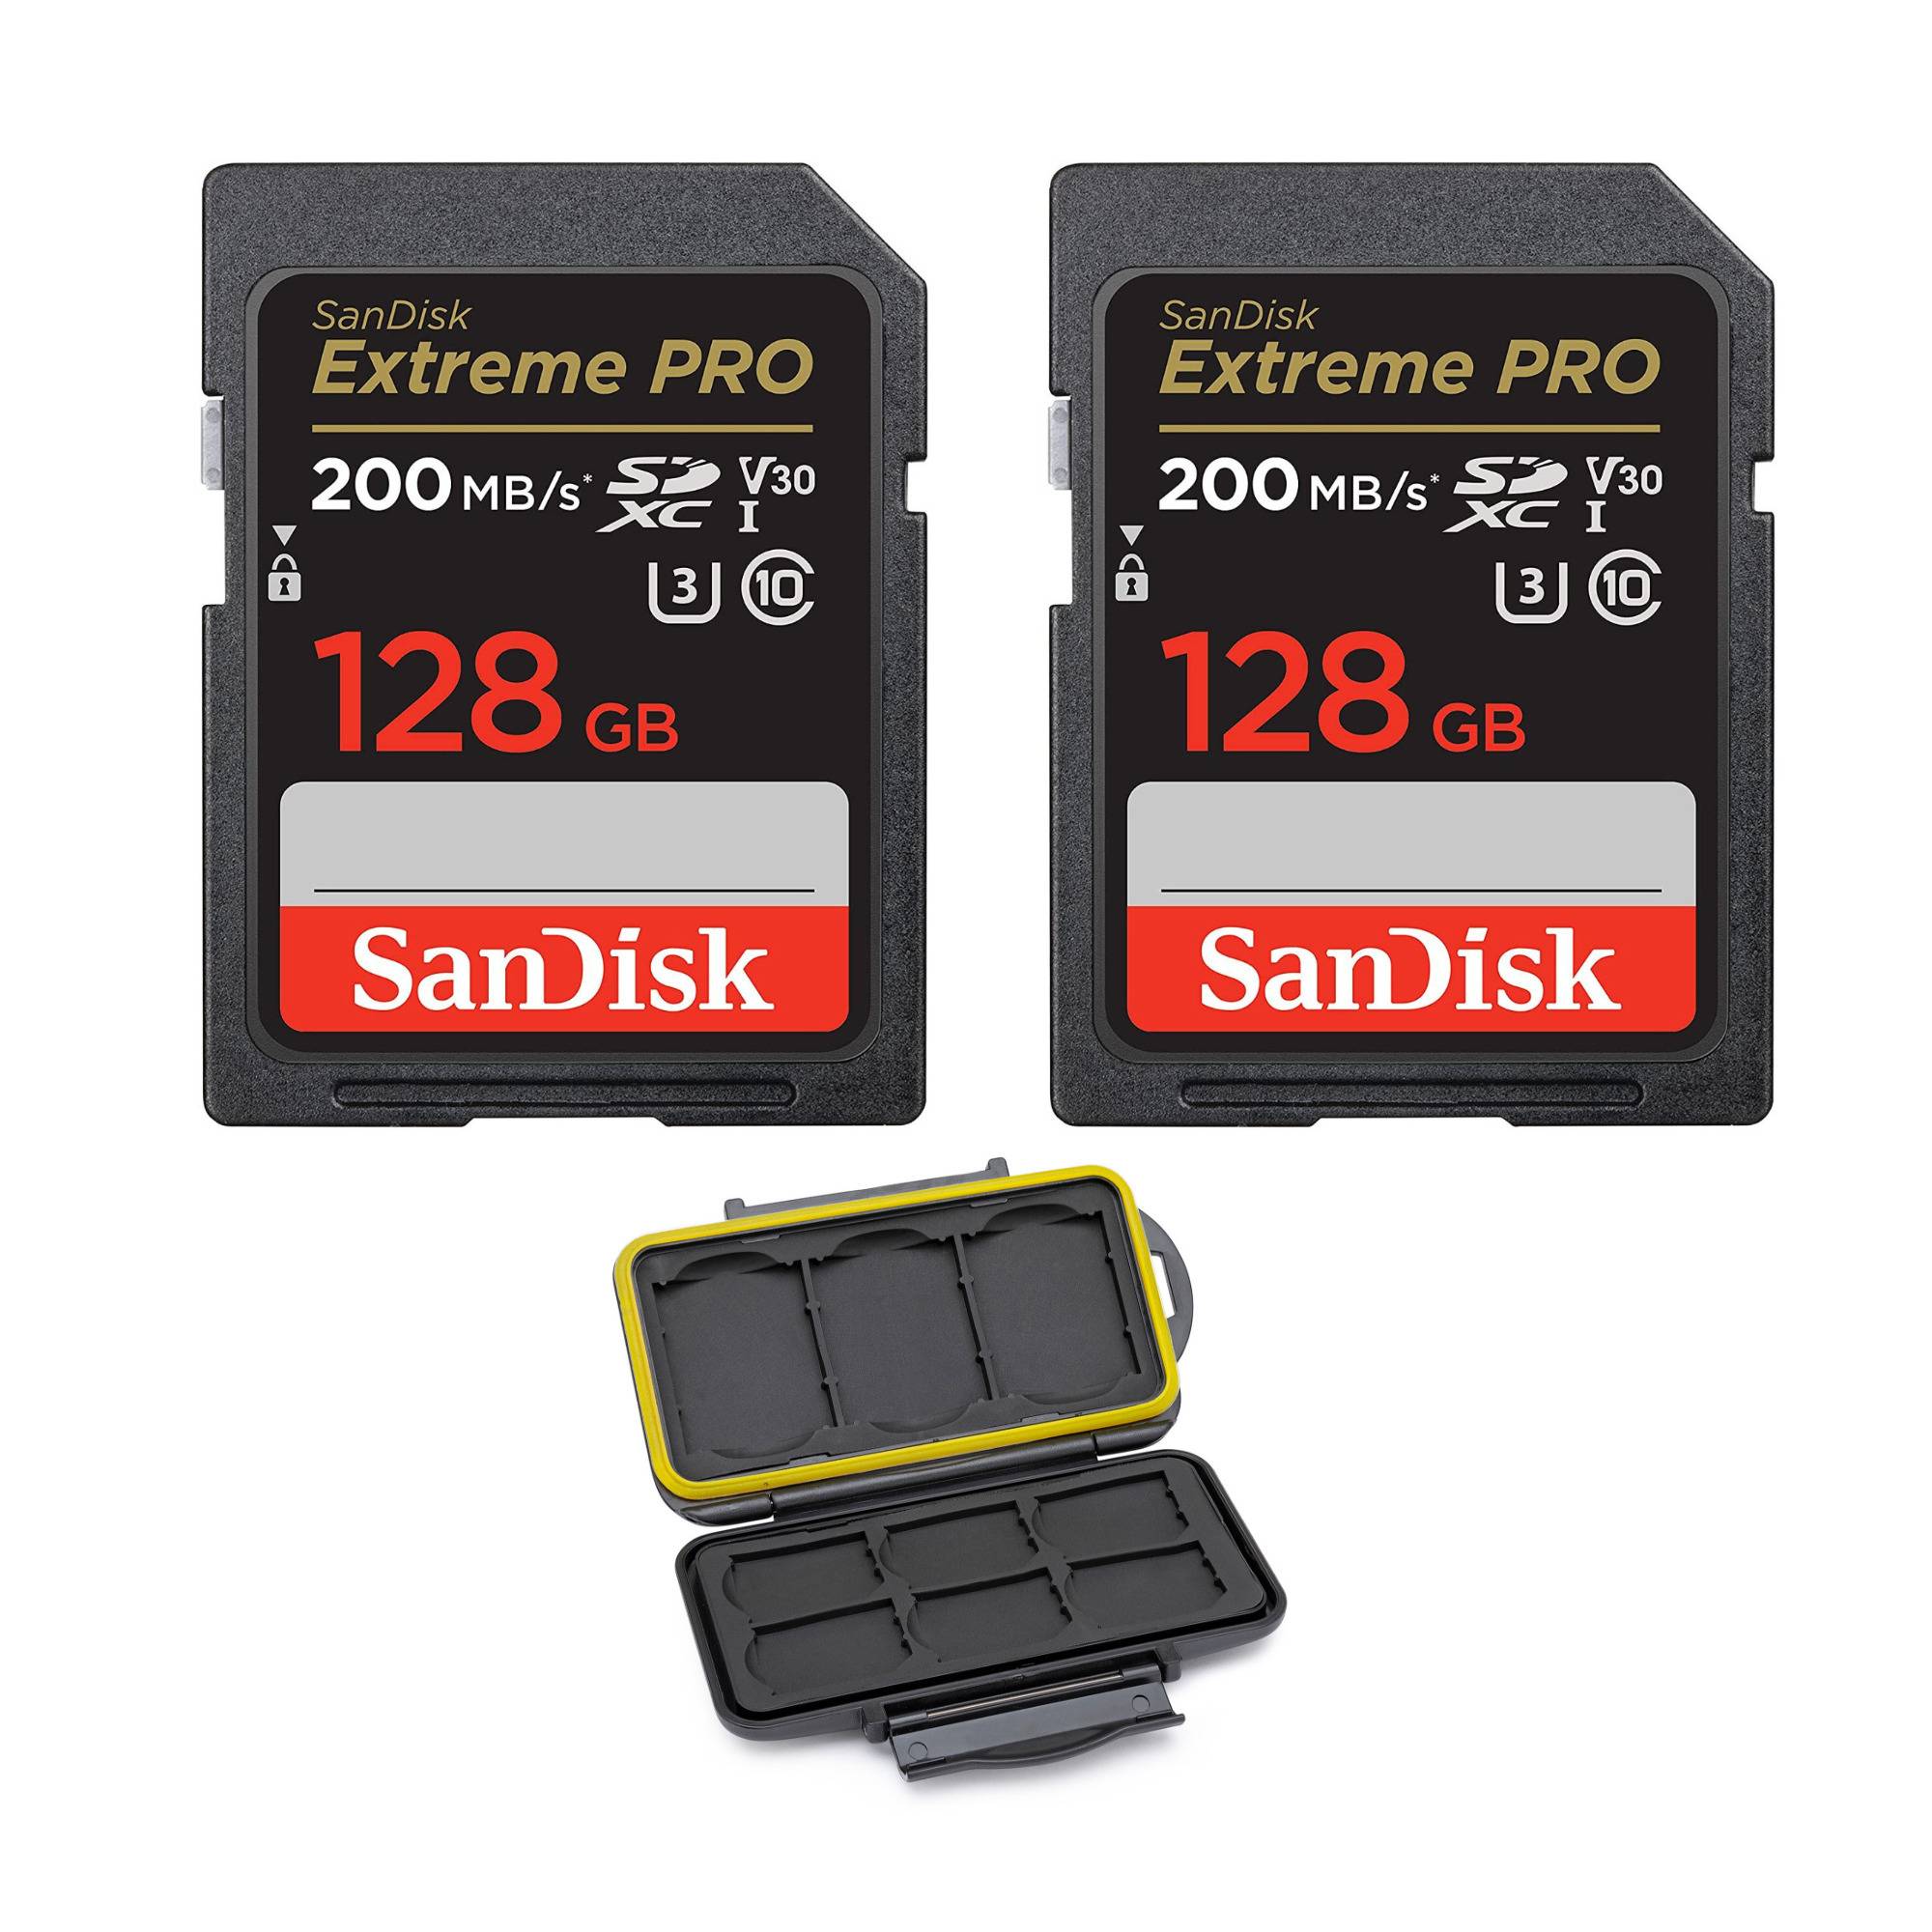 SanDisk 128GB Extreme PRO 200MB/s SDXC UHS-I Memory Card (2-pack) with Koah Pro Memory Case Bundle